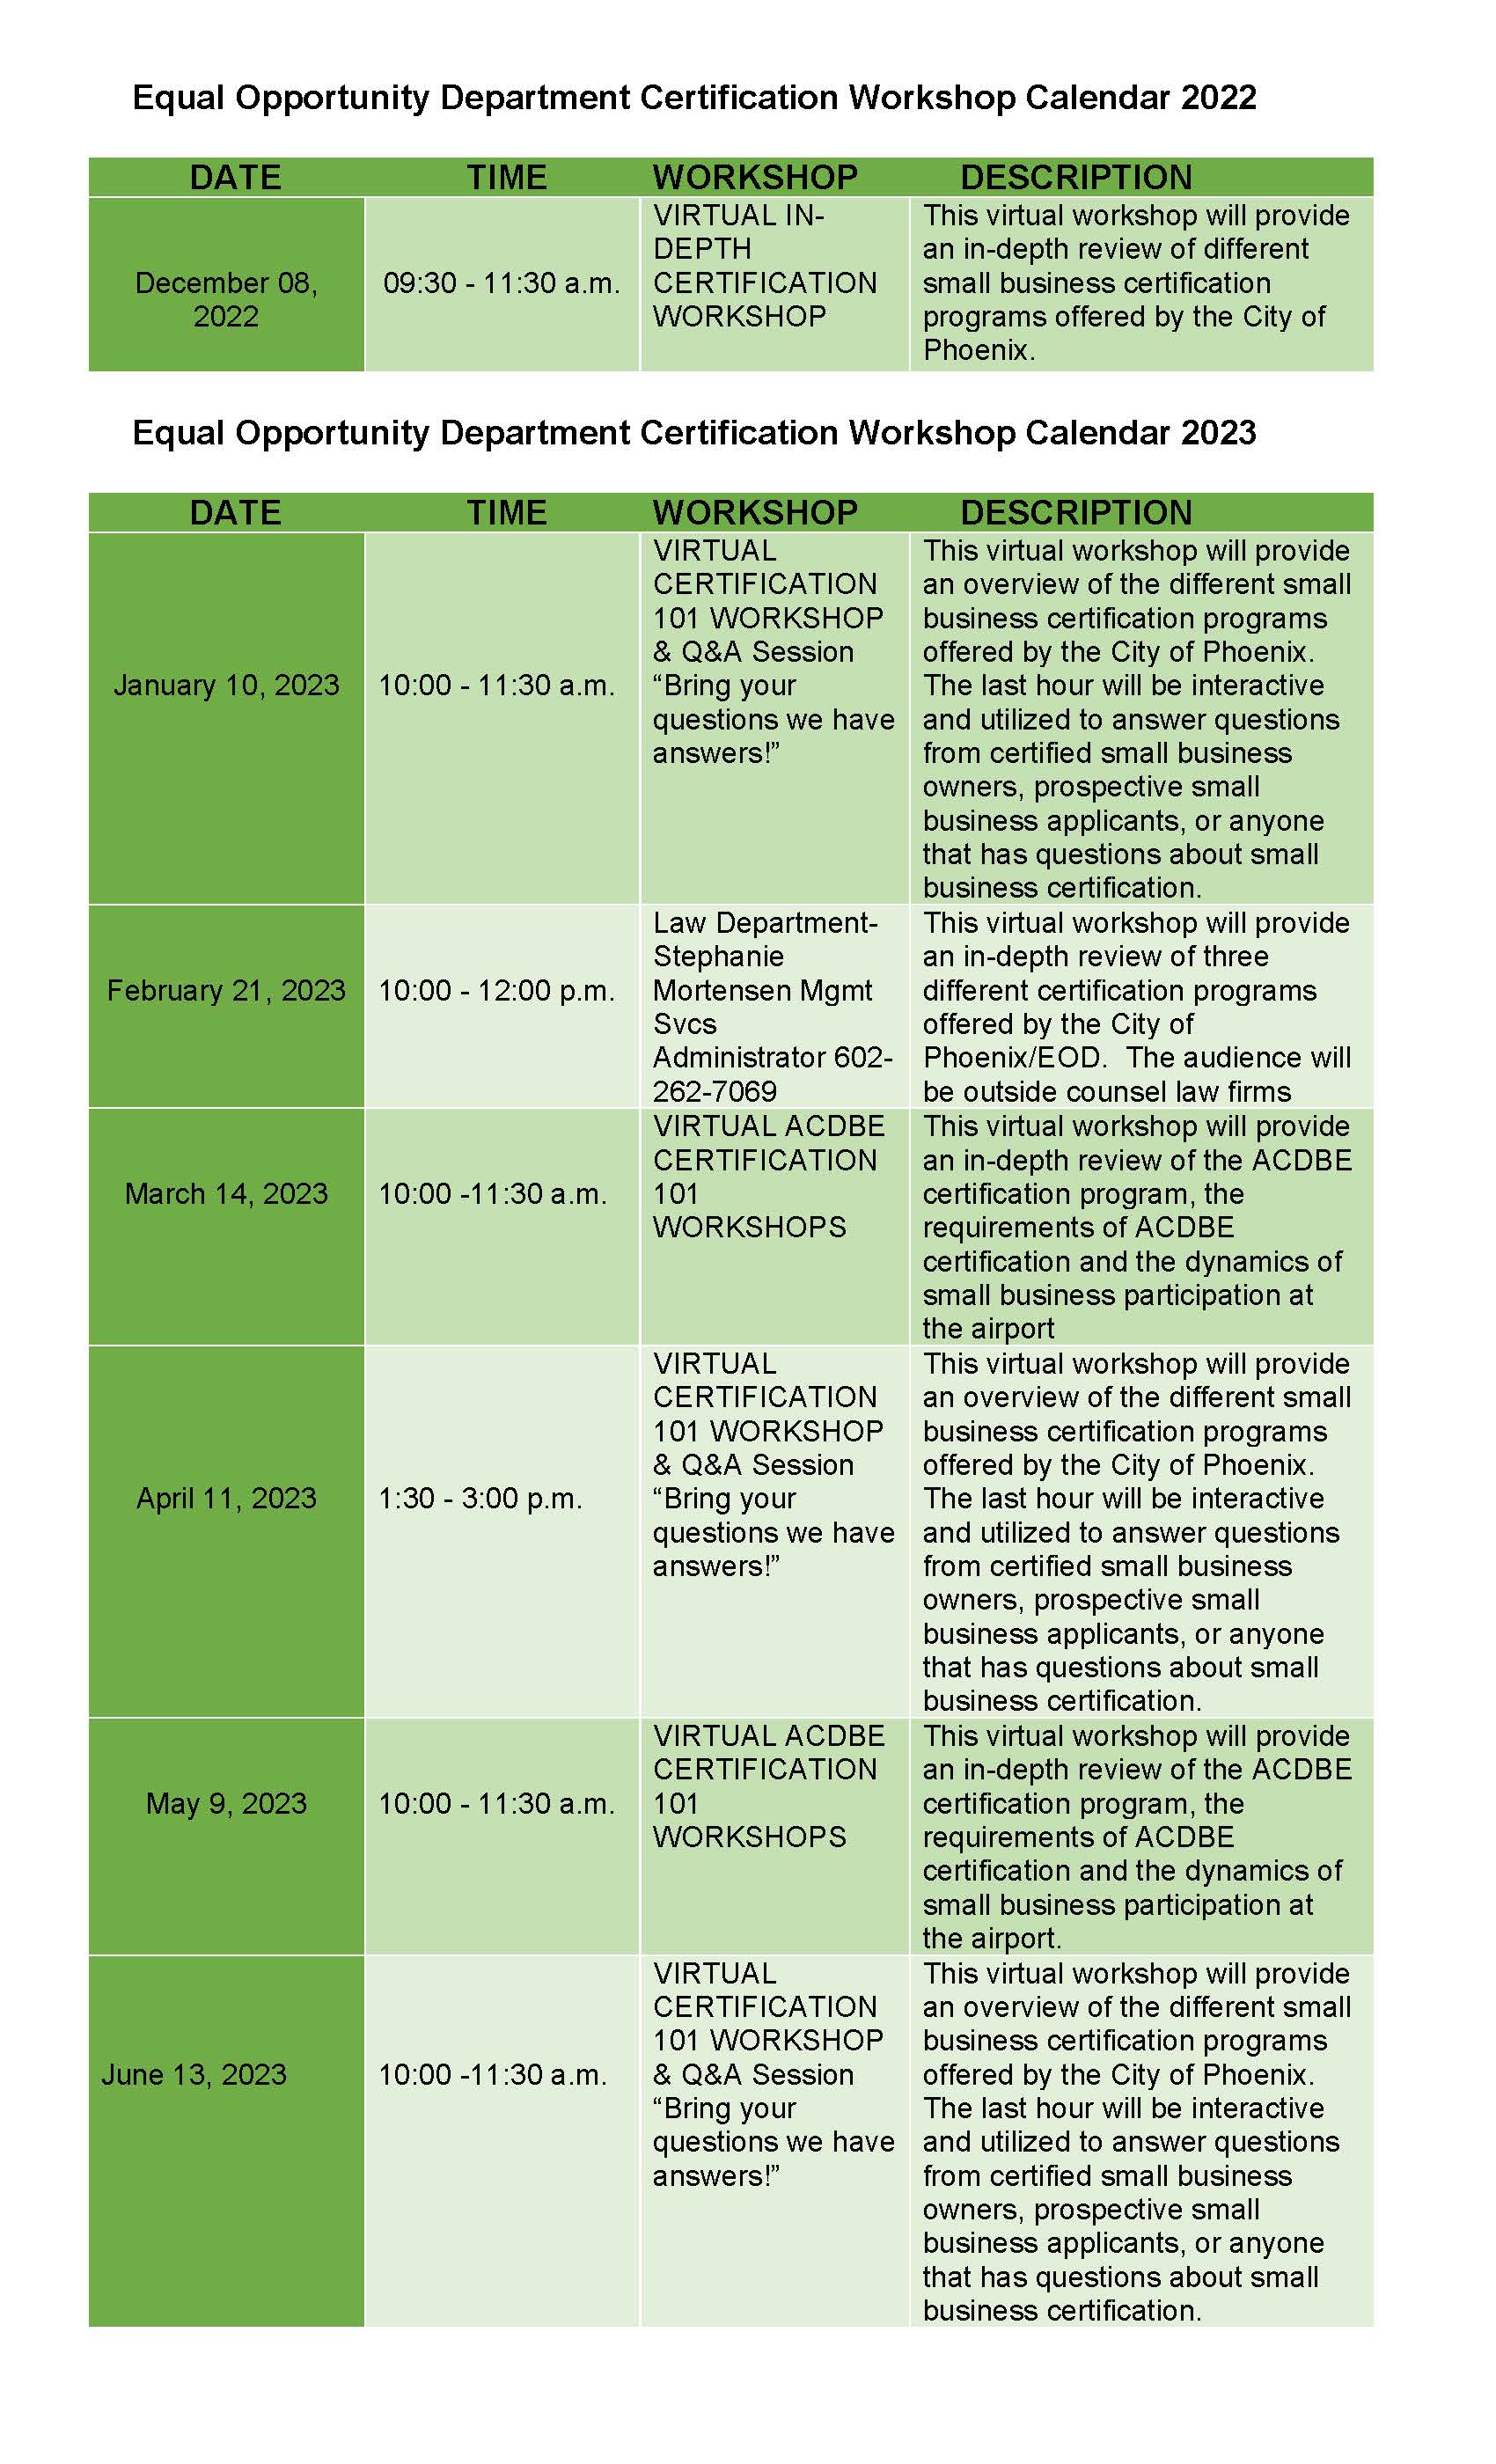 Workshop Schedule 2023 for EOD website_Page_1.jpg